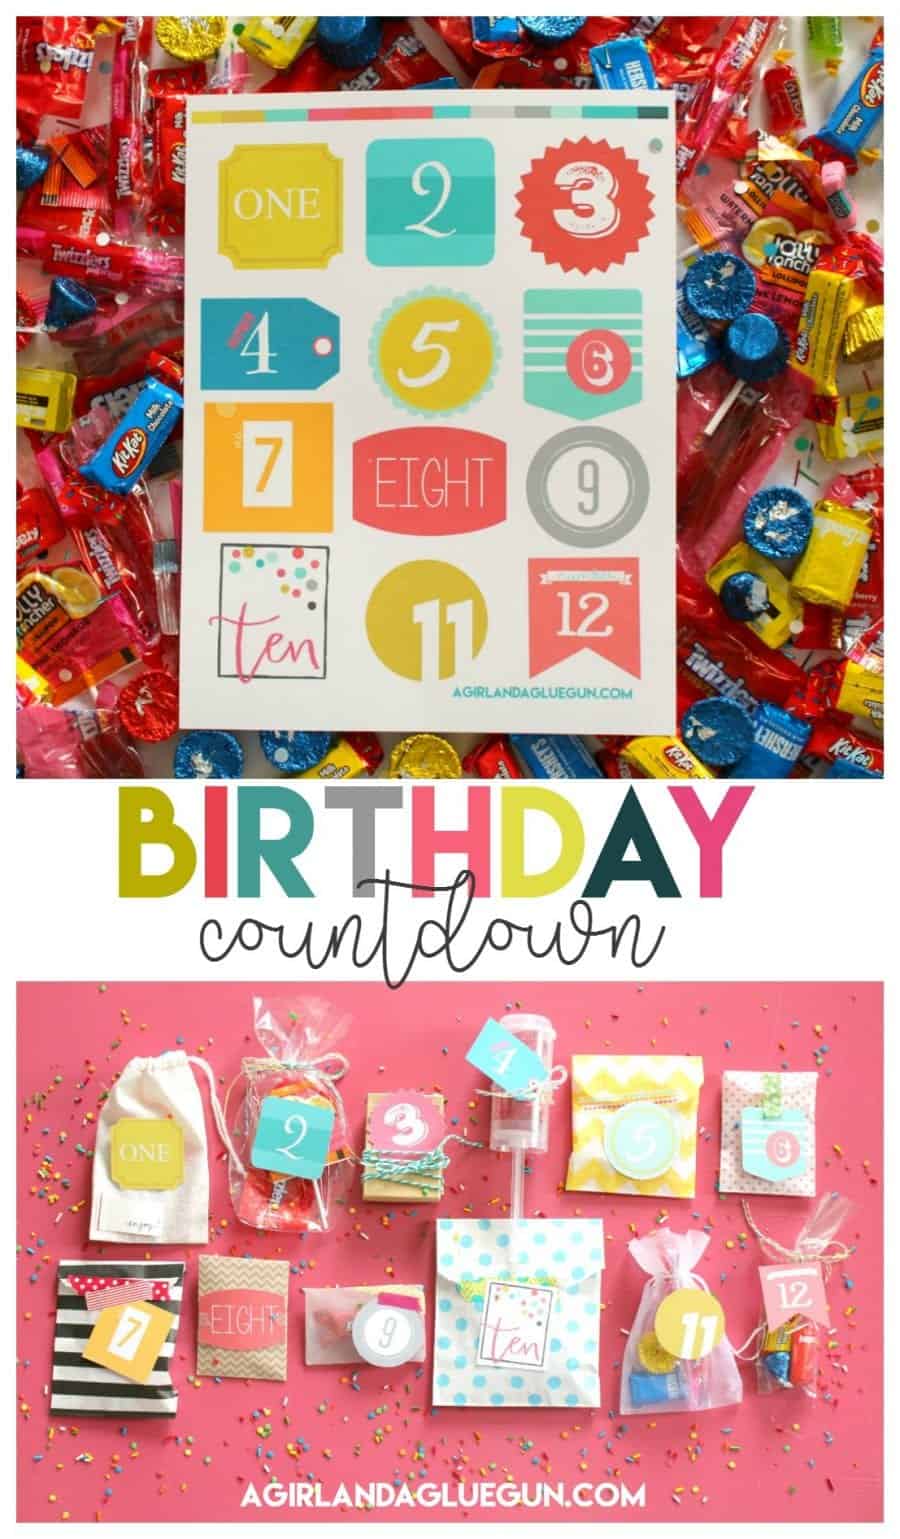 ideas to make a birthday Extra Special